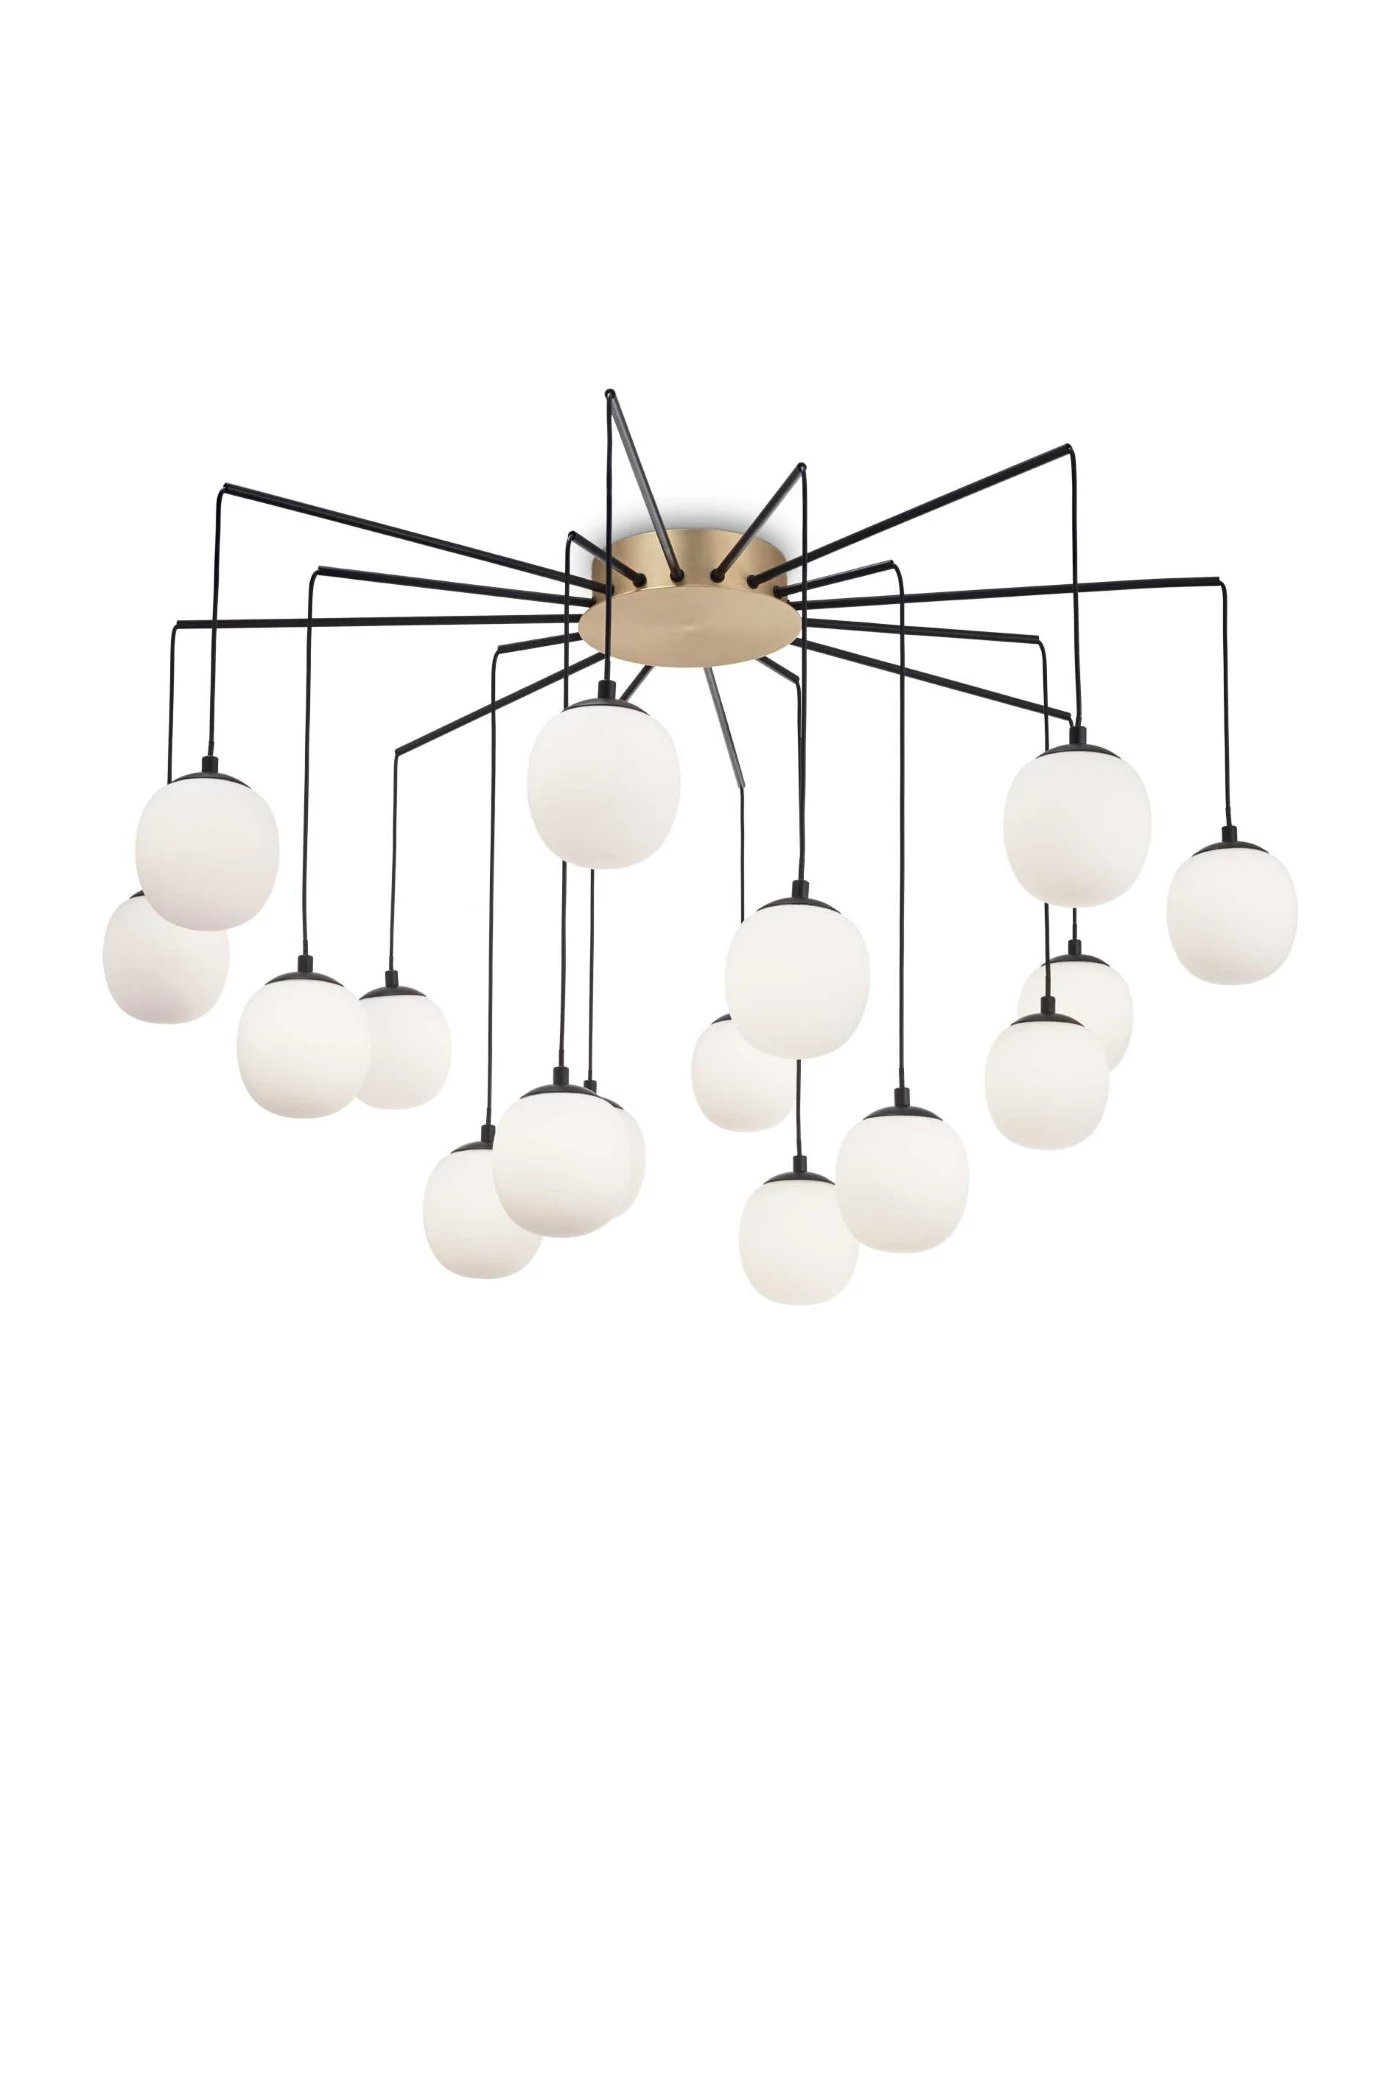   
                        
                        Люстра IDEAL LUX (Италия) 43822    
                         в стиле Модерн.  
                        Тип источника света: светодиодная лампа, сменная.                         Форма: Круг.                         Цвета плафонов и подвесок: Белый.                         Материал: Стекло.                          фото 1